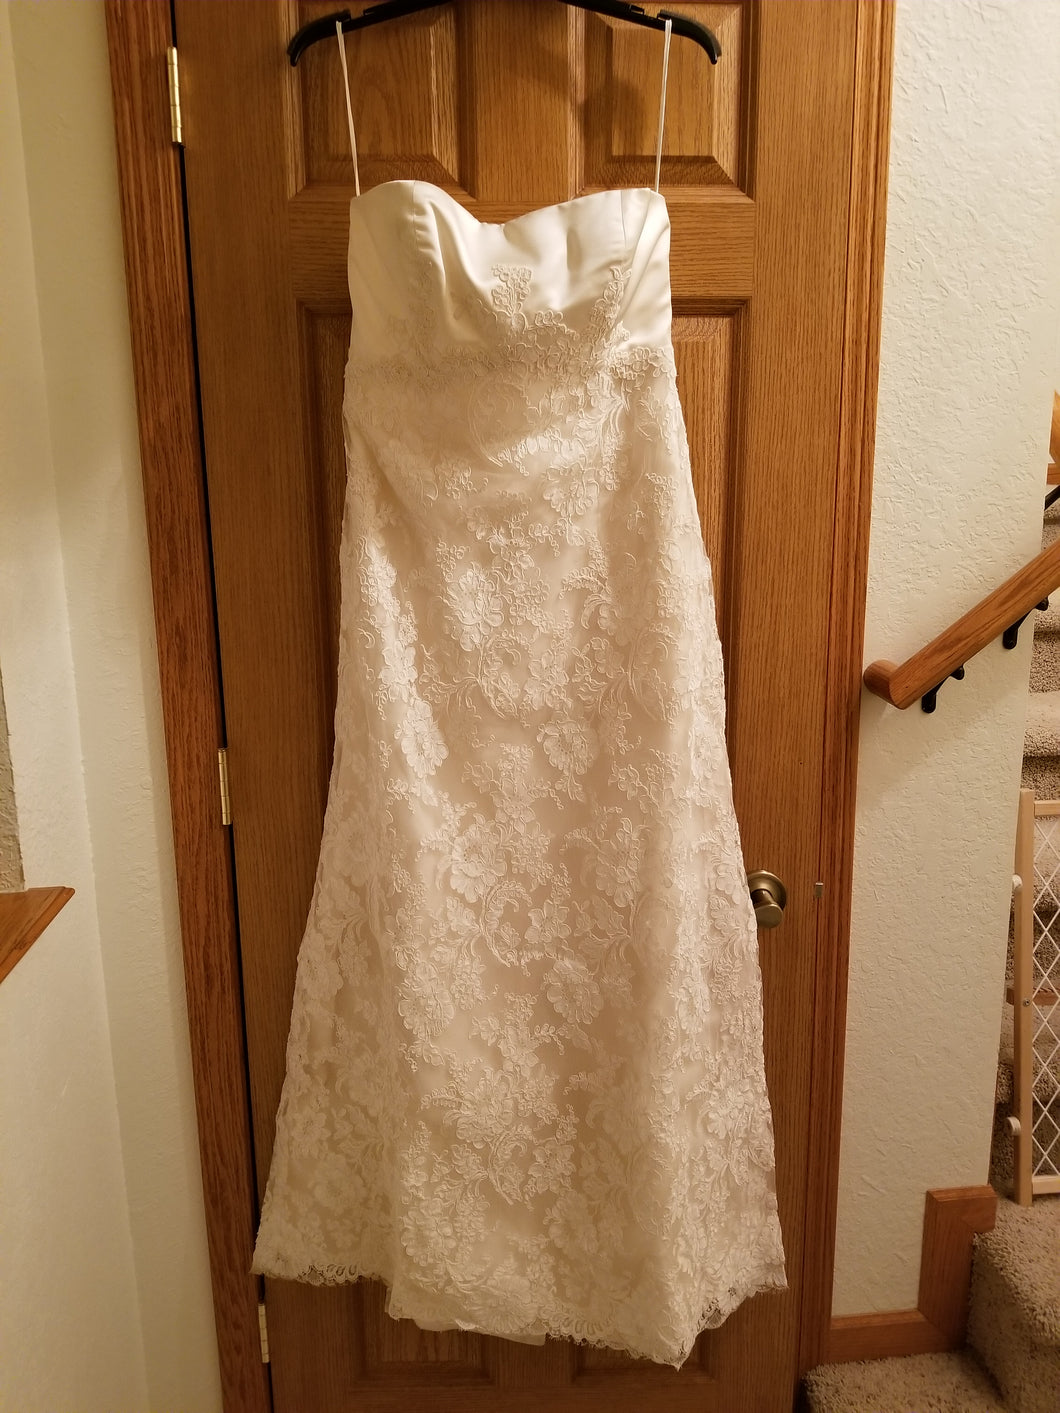 Christos 'Elegant Sheath' size 8 used wedding dress front view on hanger